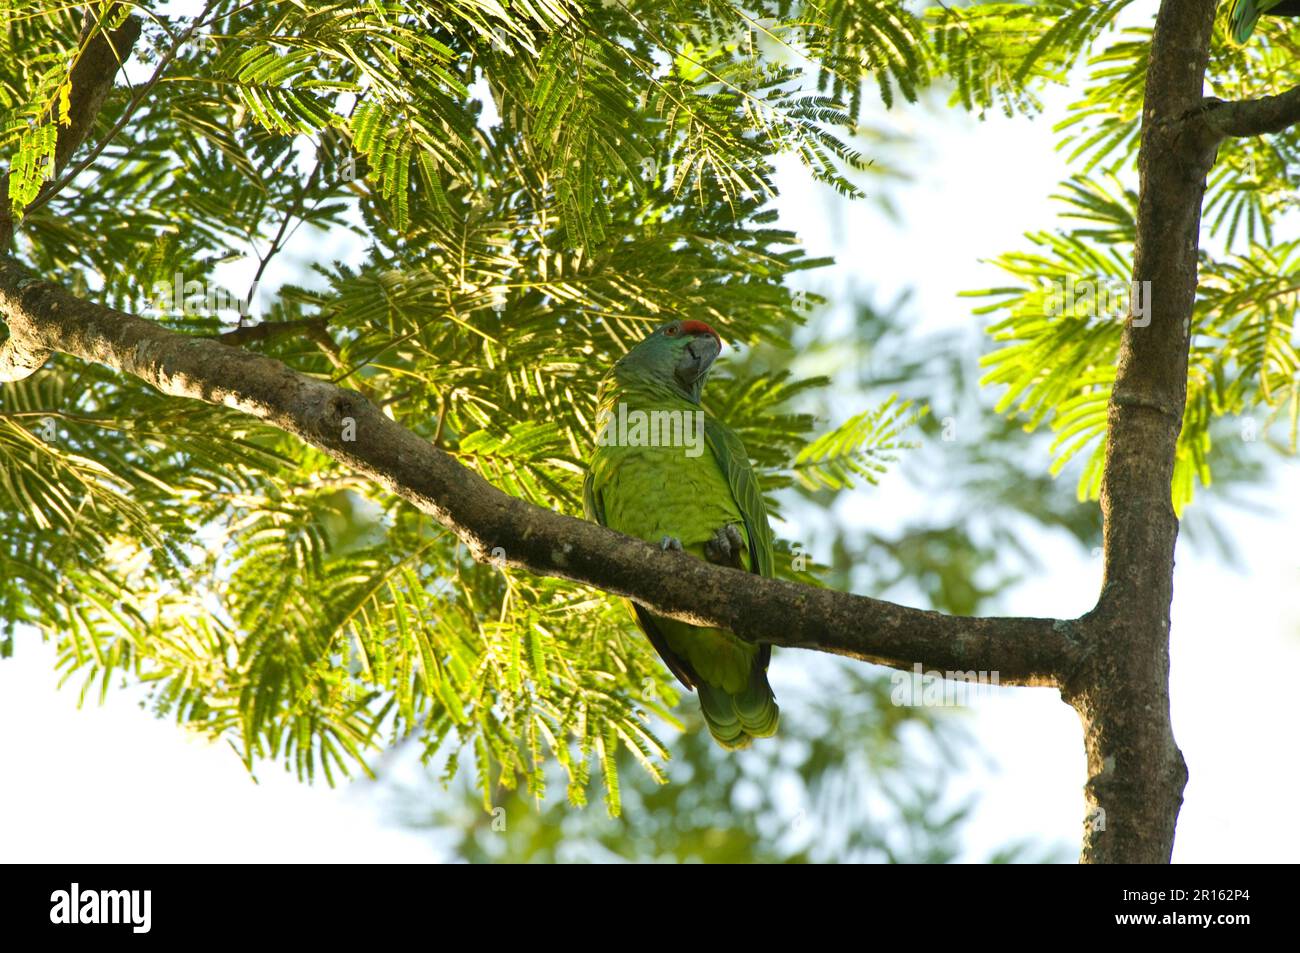 Amazon festive parrot (Amazona festiva bodini) adult, sitting on a branch, Botanical Gardens, Georgetown, Guyana Stock Photo